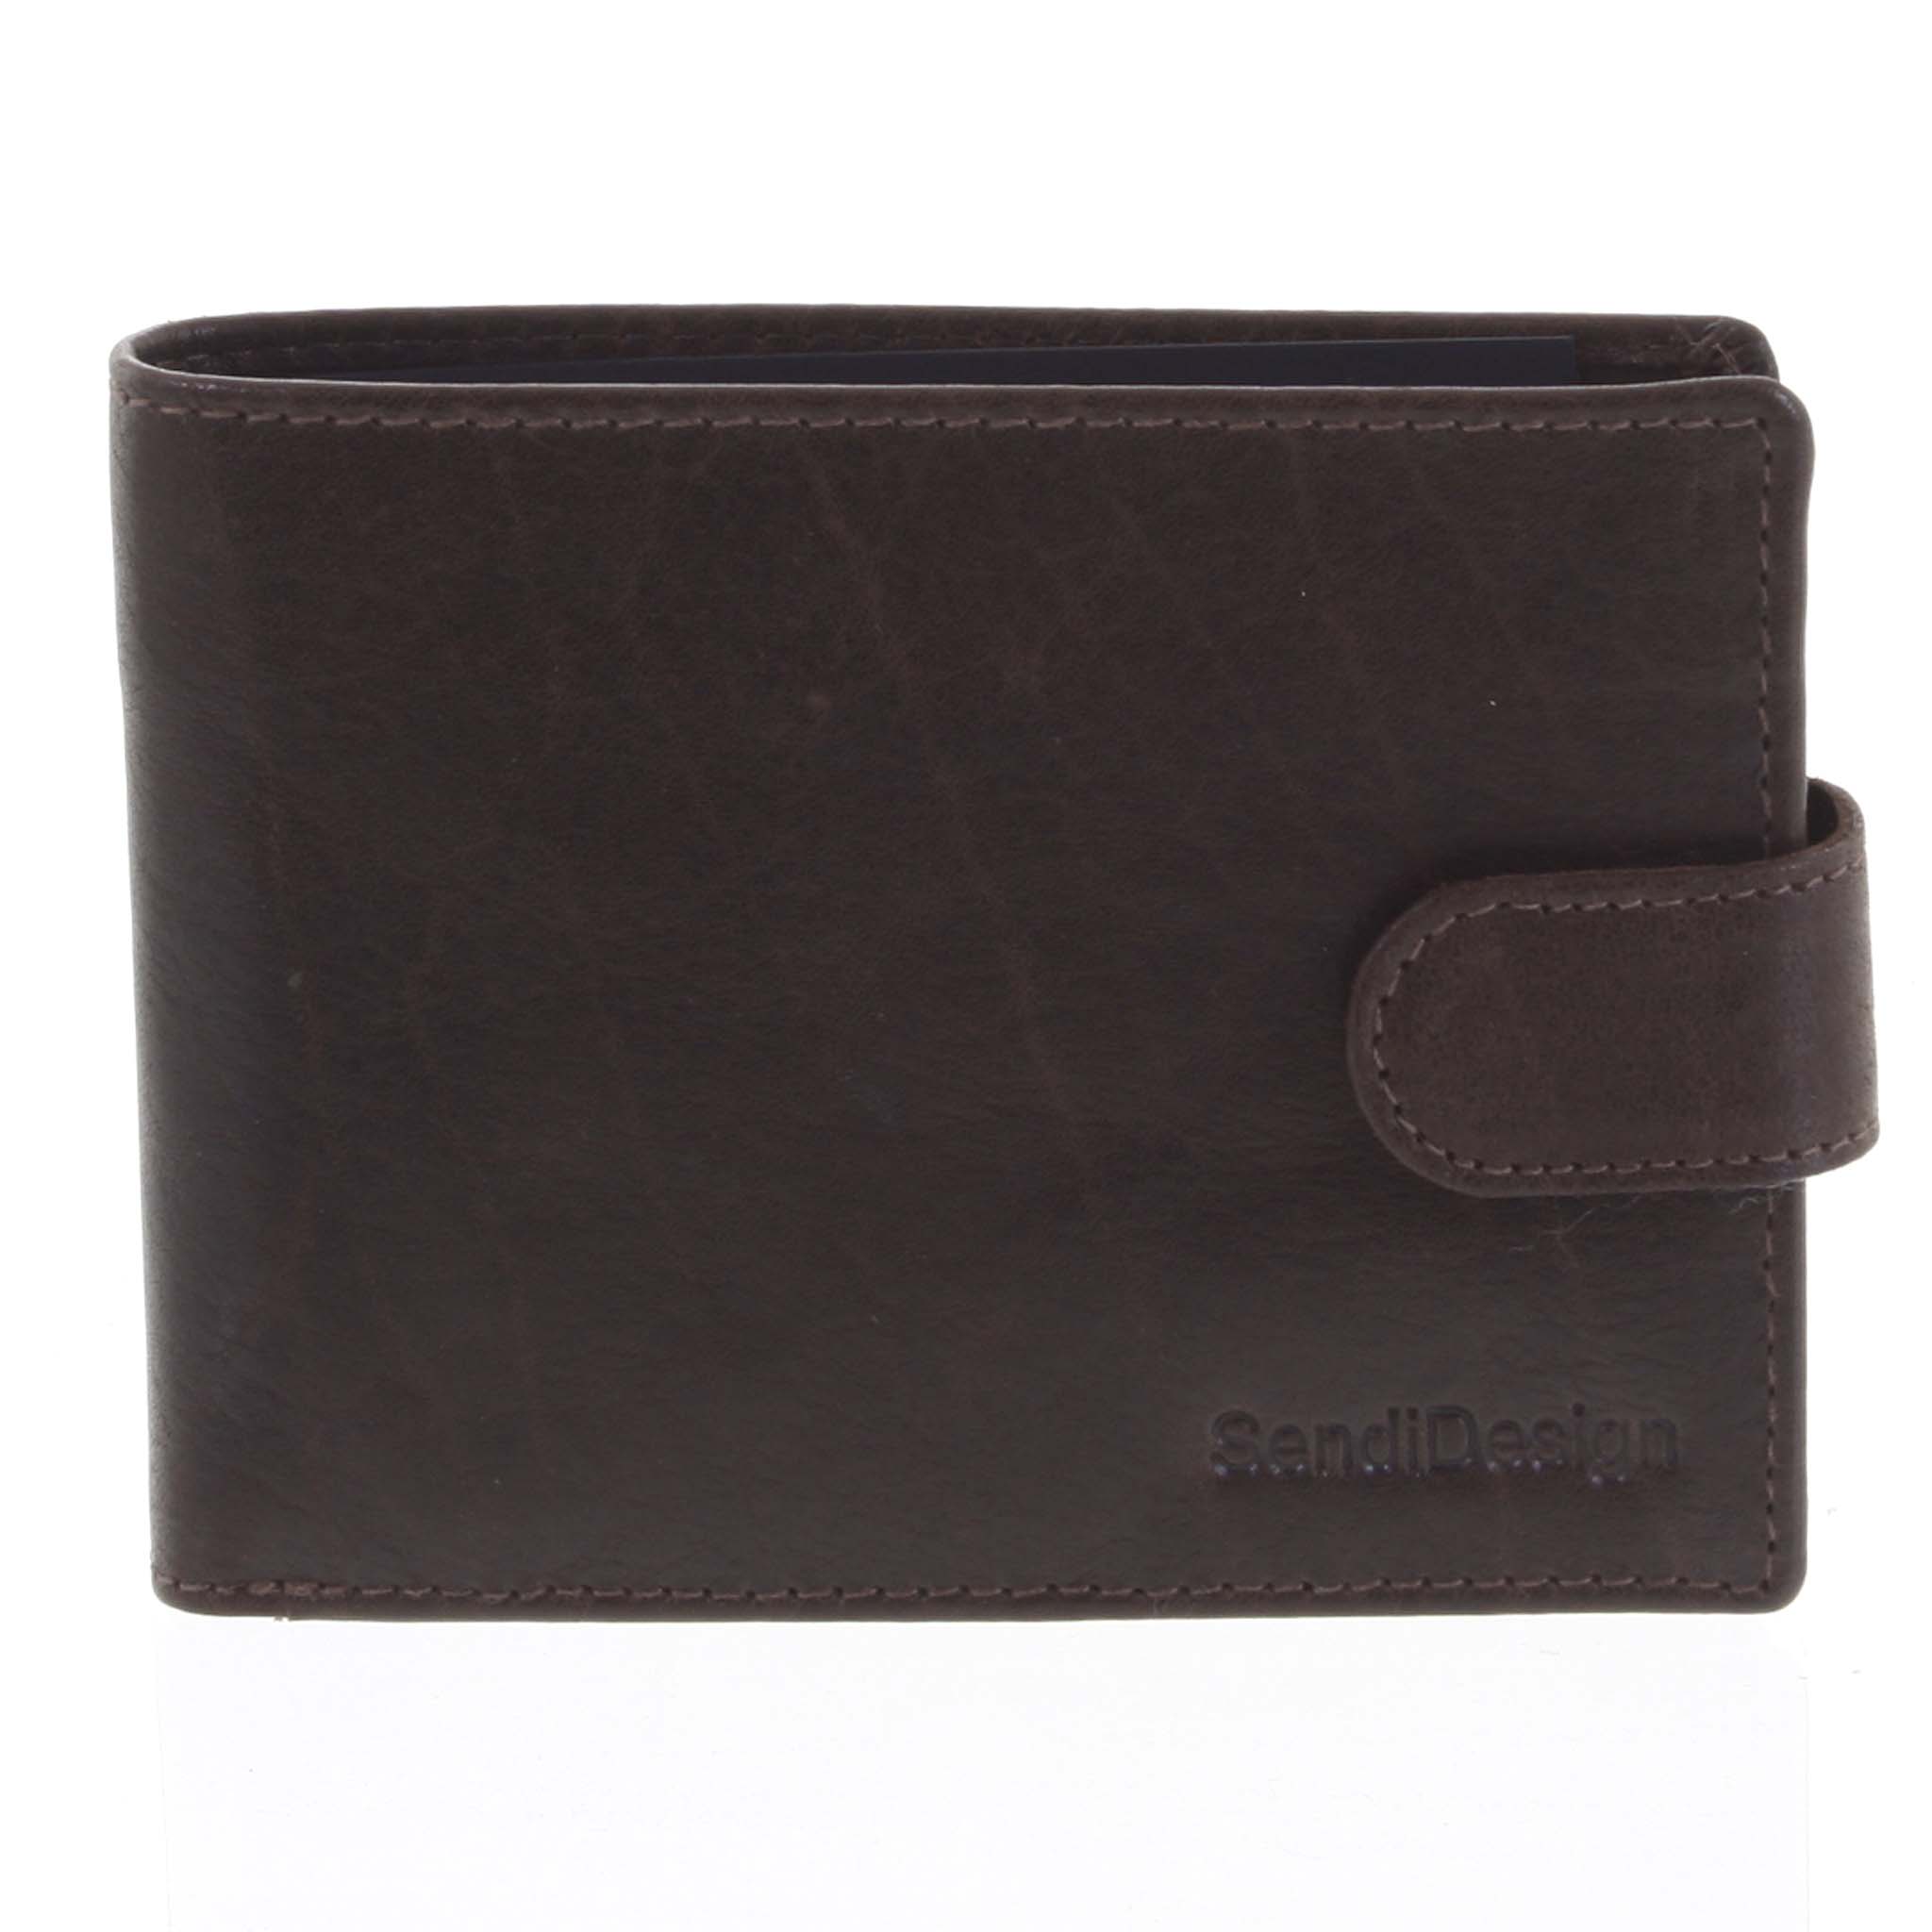 Pánská kožená peněženka tmavě hnědá - SendiDesign Mheo